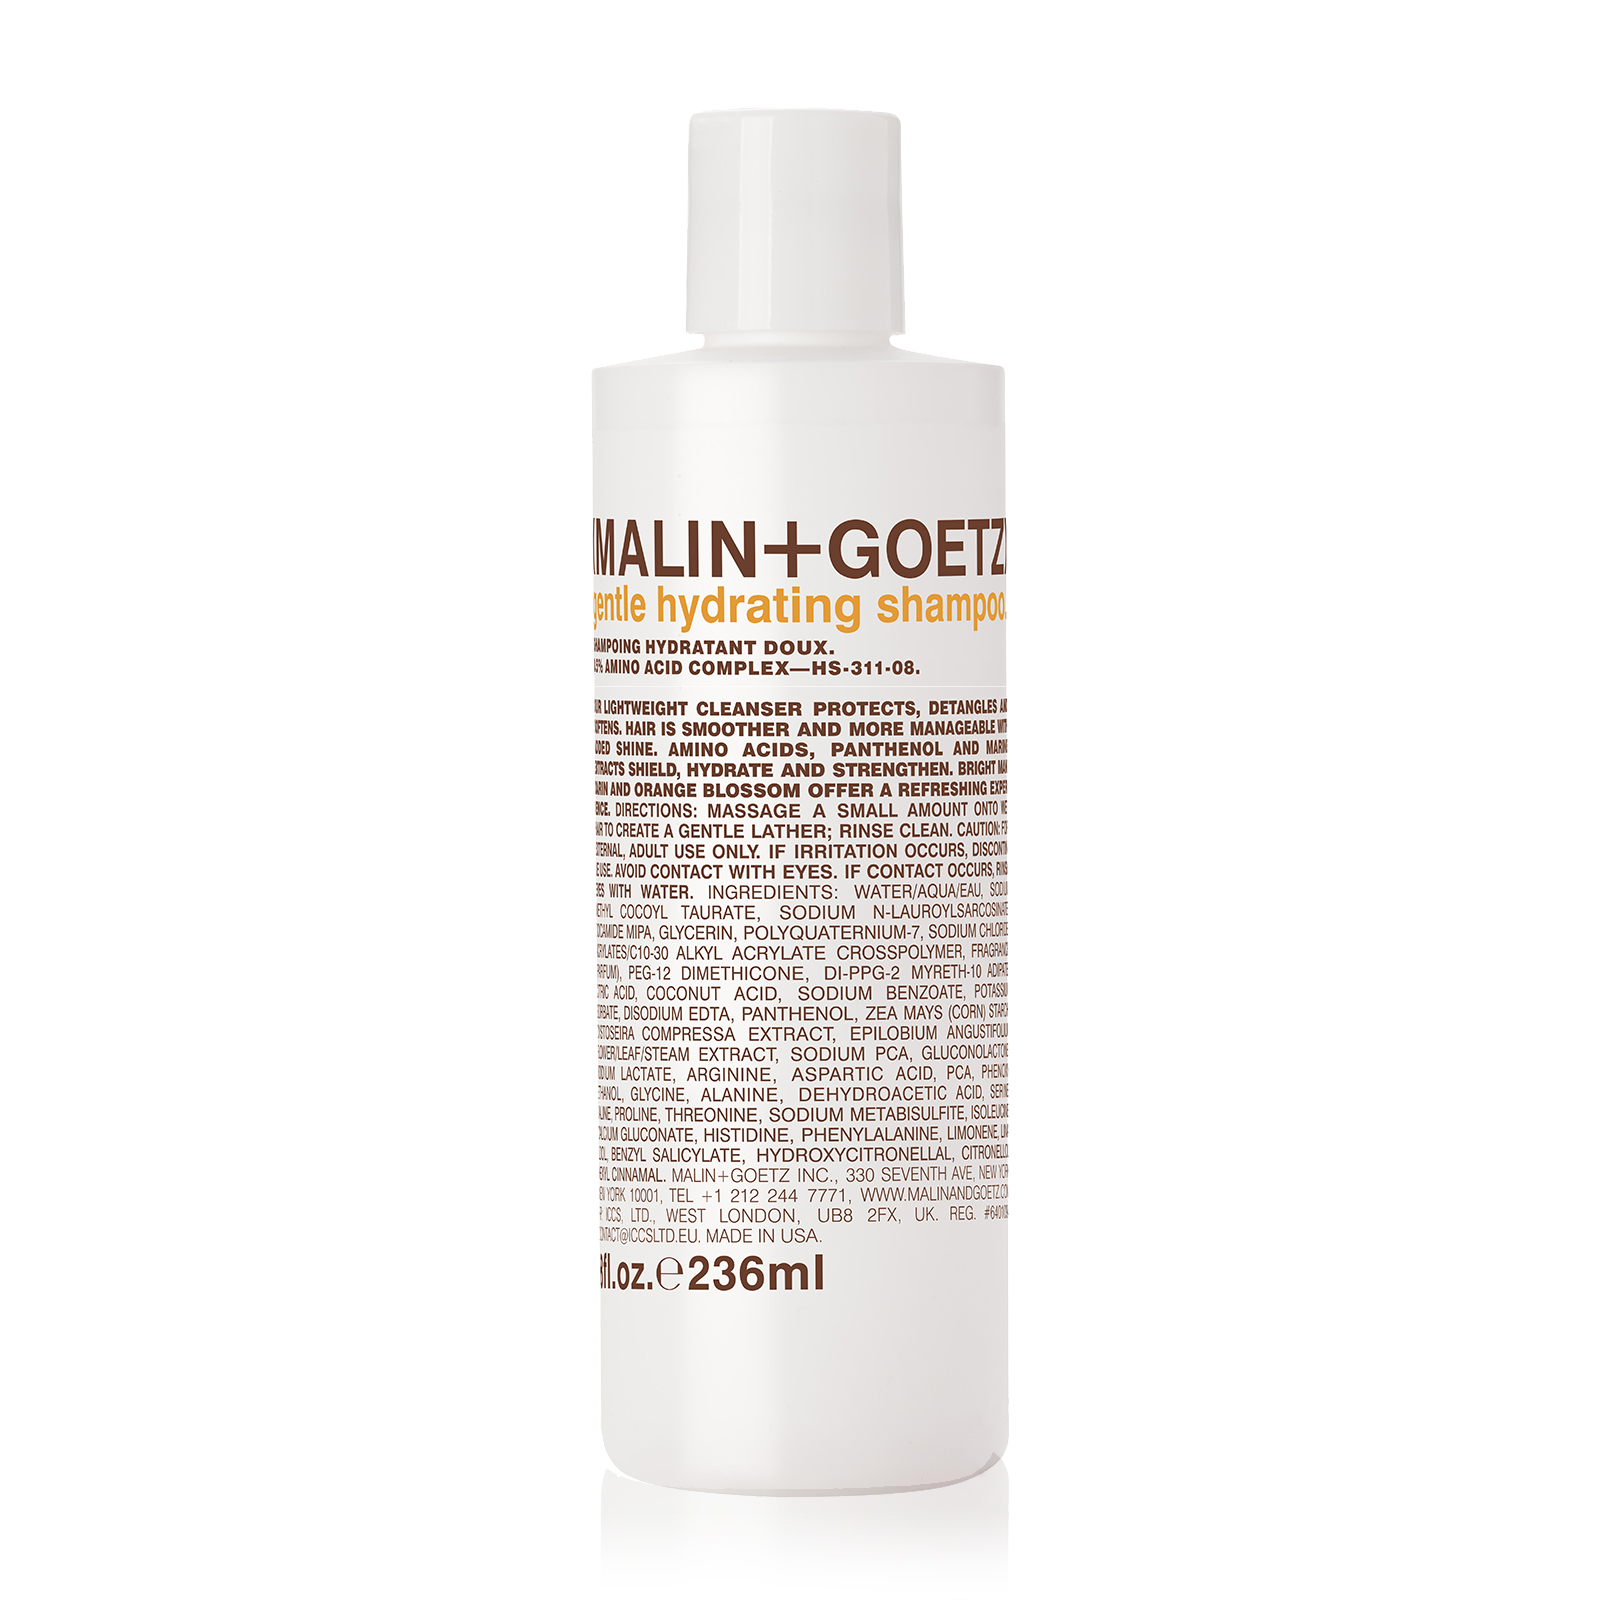 MALIN+GOETZ Gentle Hydrating Shampoo